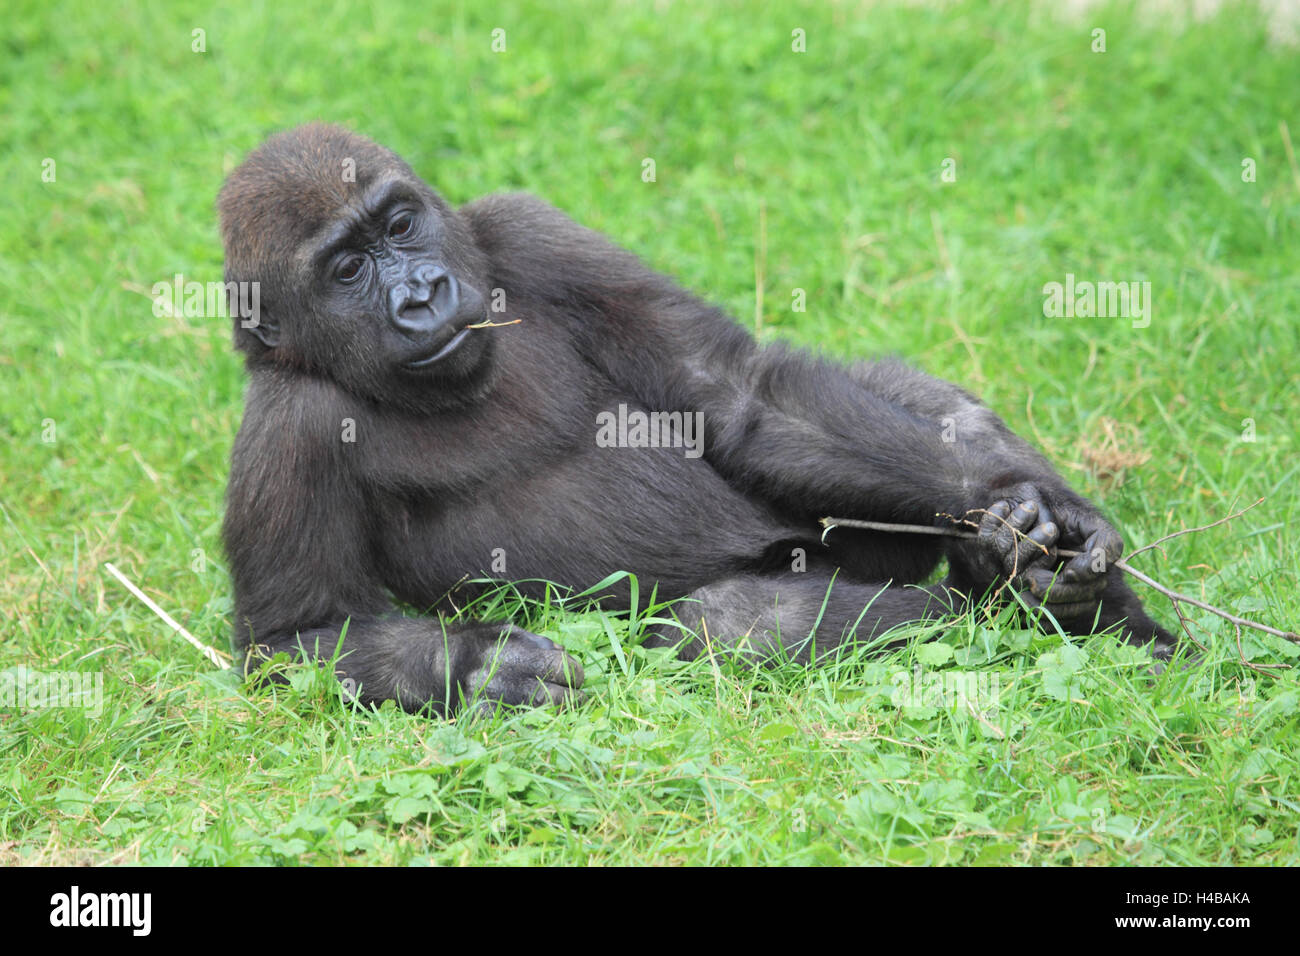 Western gorilla, gorilla gorilla Stock Photo